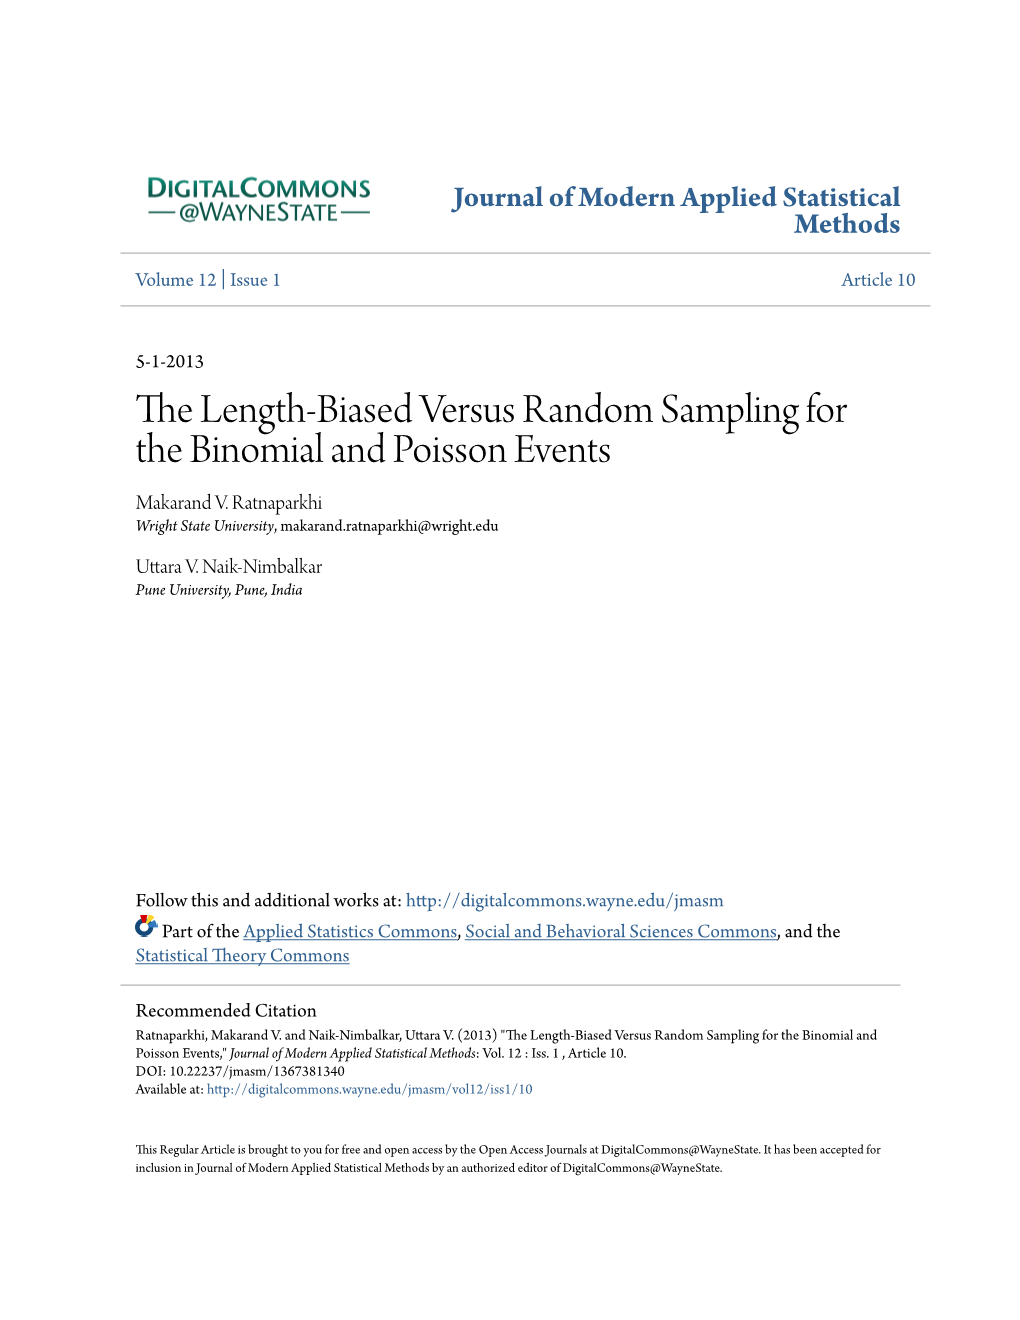 The Length-Biased Versus Random Sampling for the Binomial and Poisson Events Makarand V